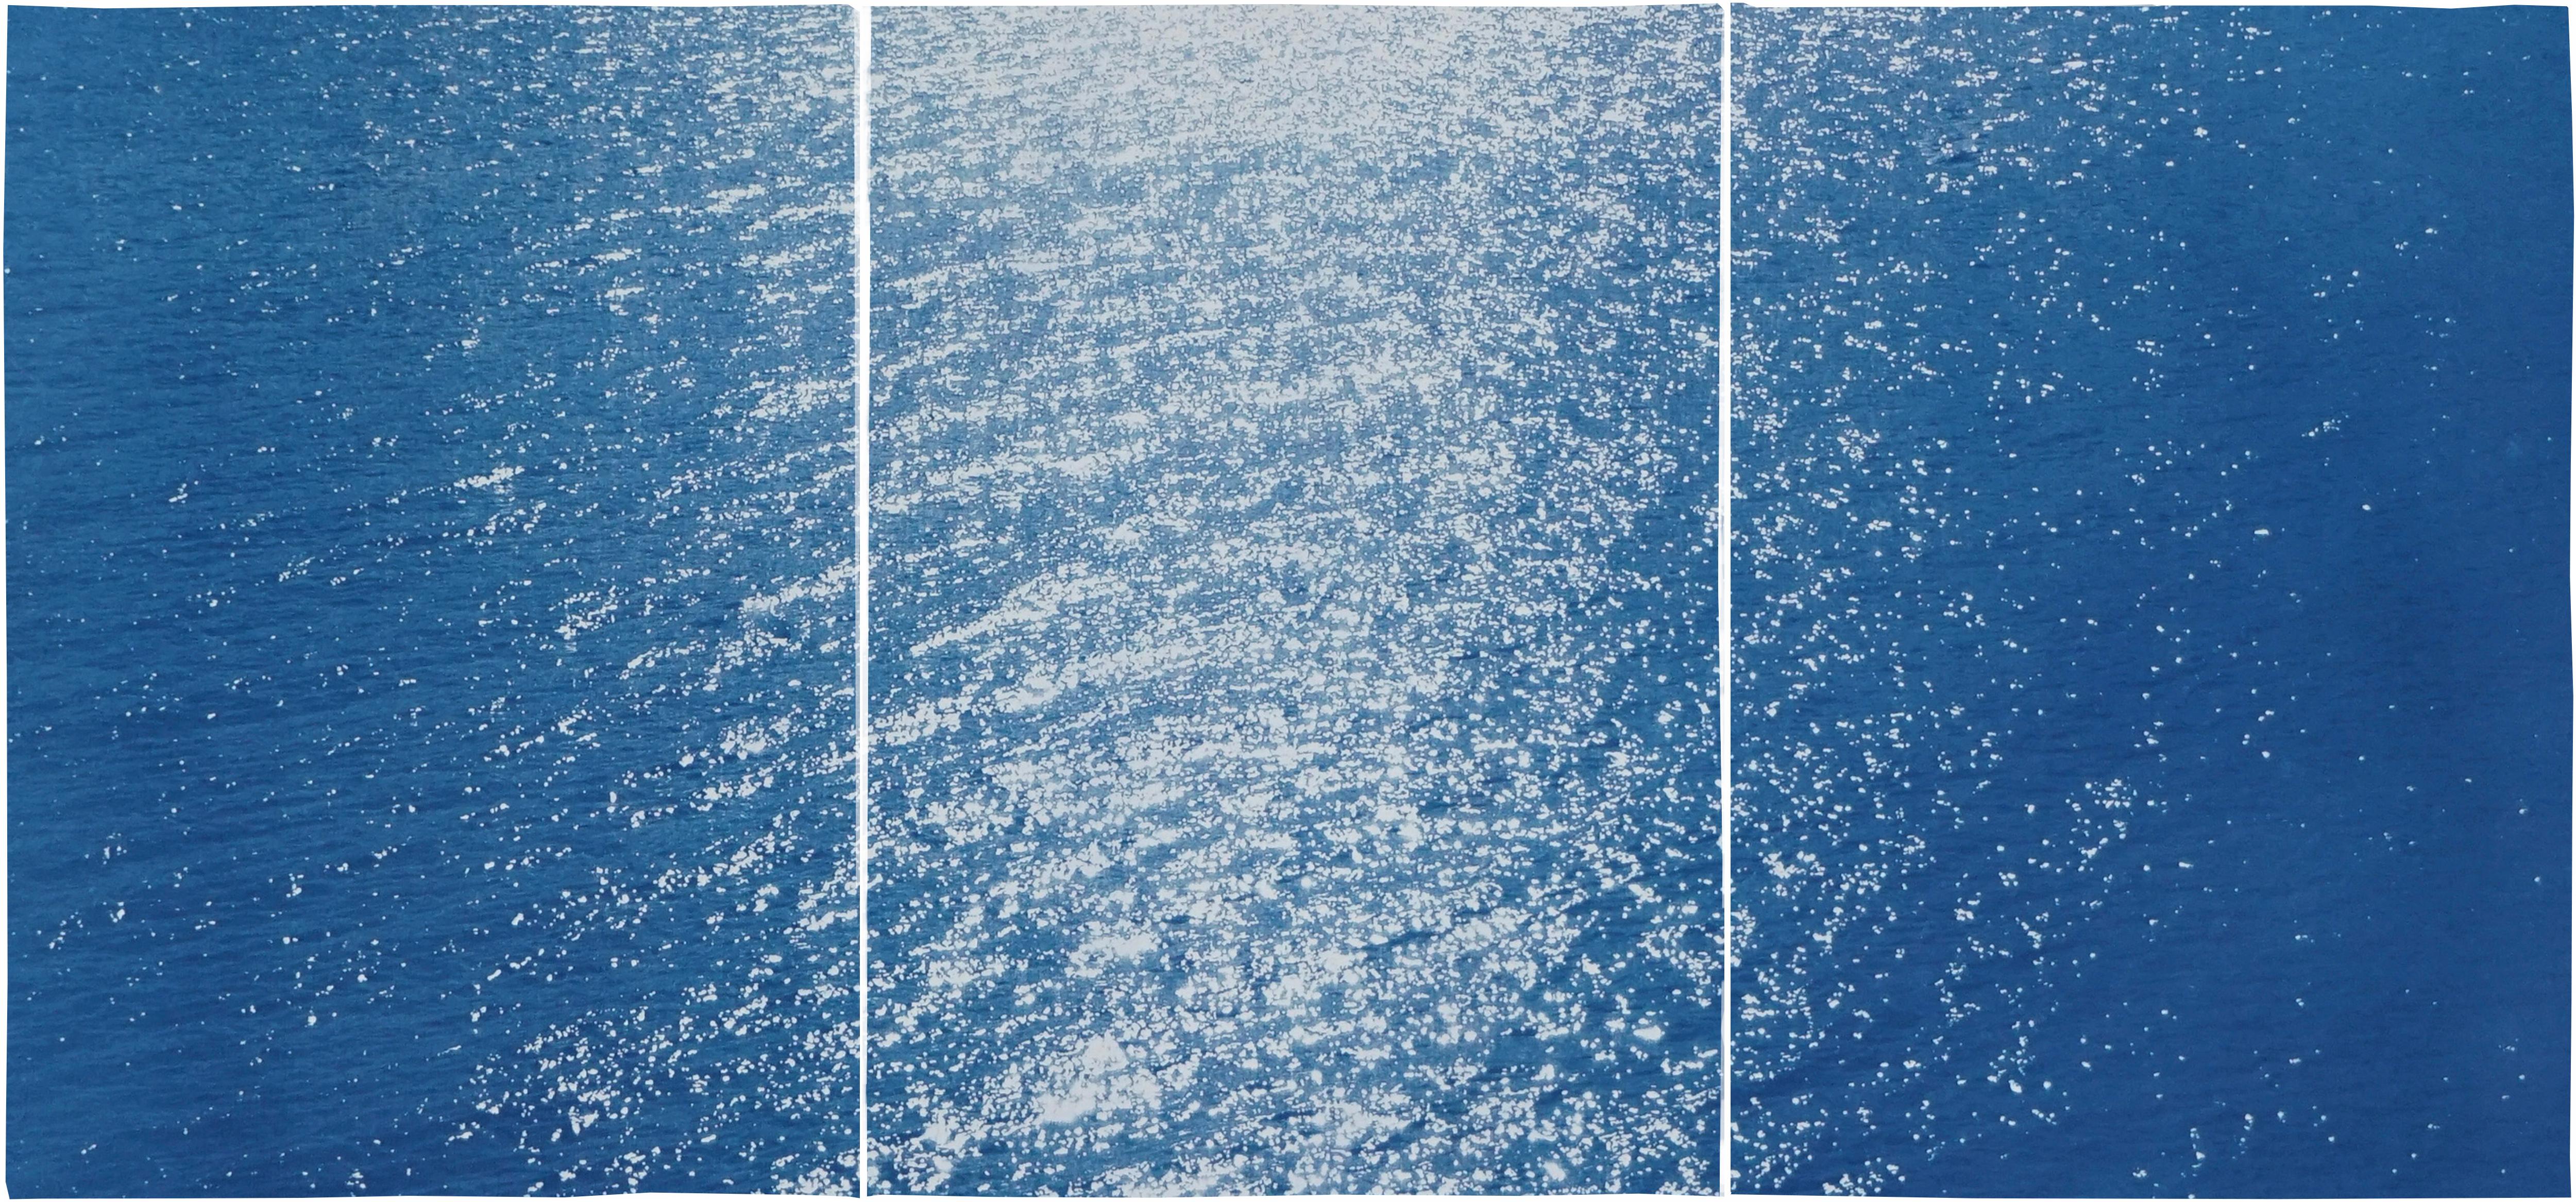 Kind of Cyan Landscape Photograph - Amalfi Coast Seascape, Nautical Triptych Cyanotype on Paper, Sunrise Bay, Blue